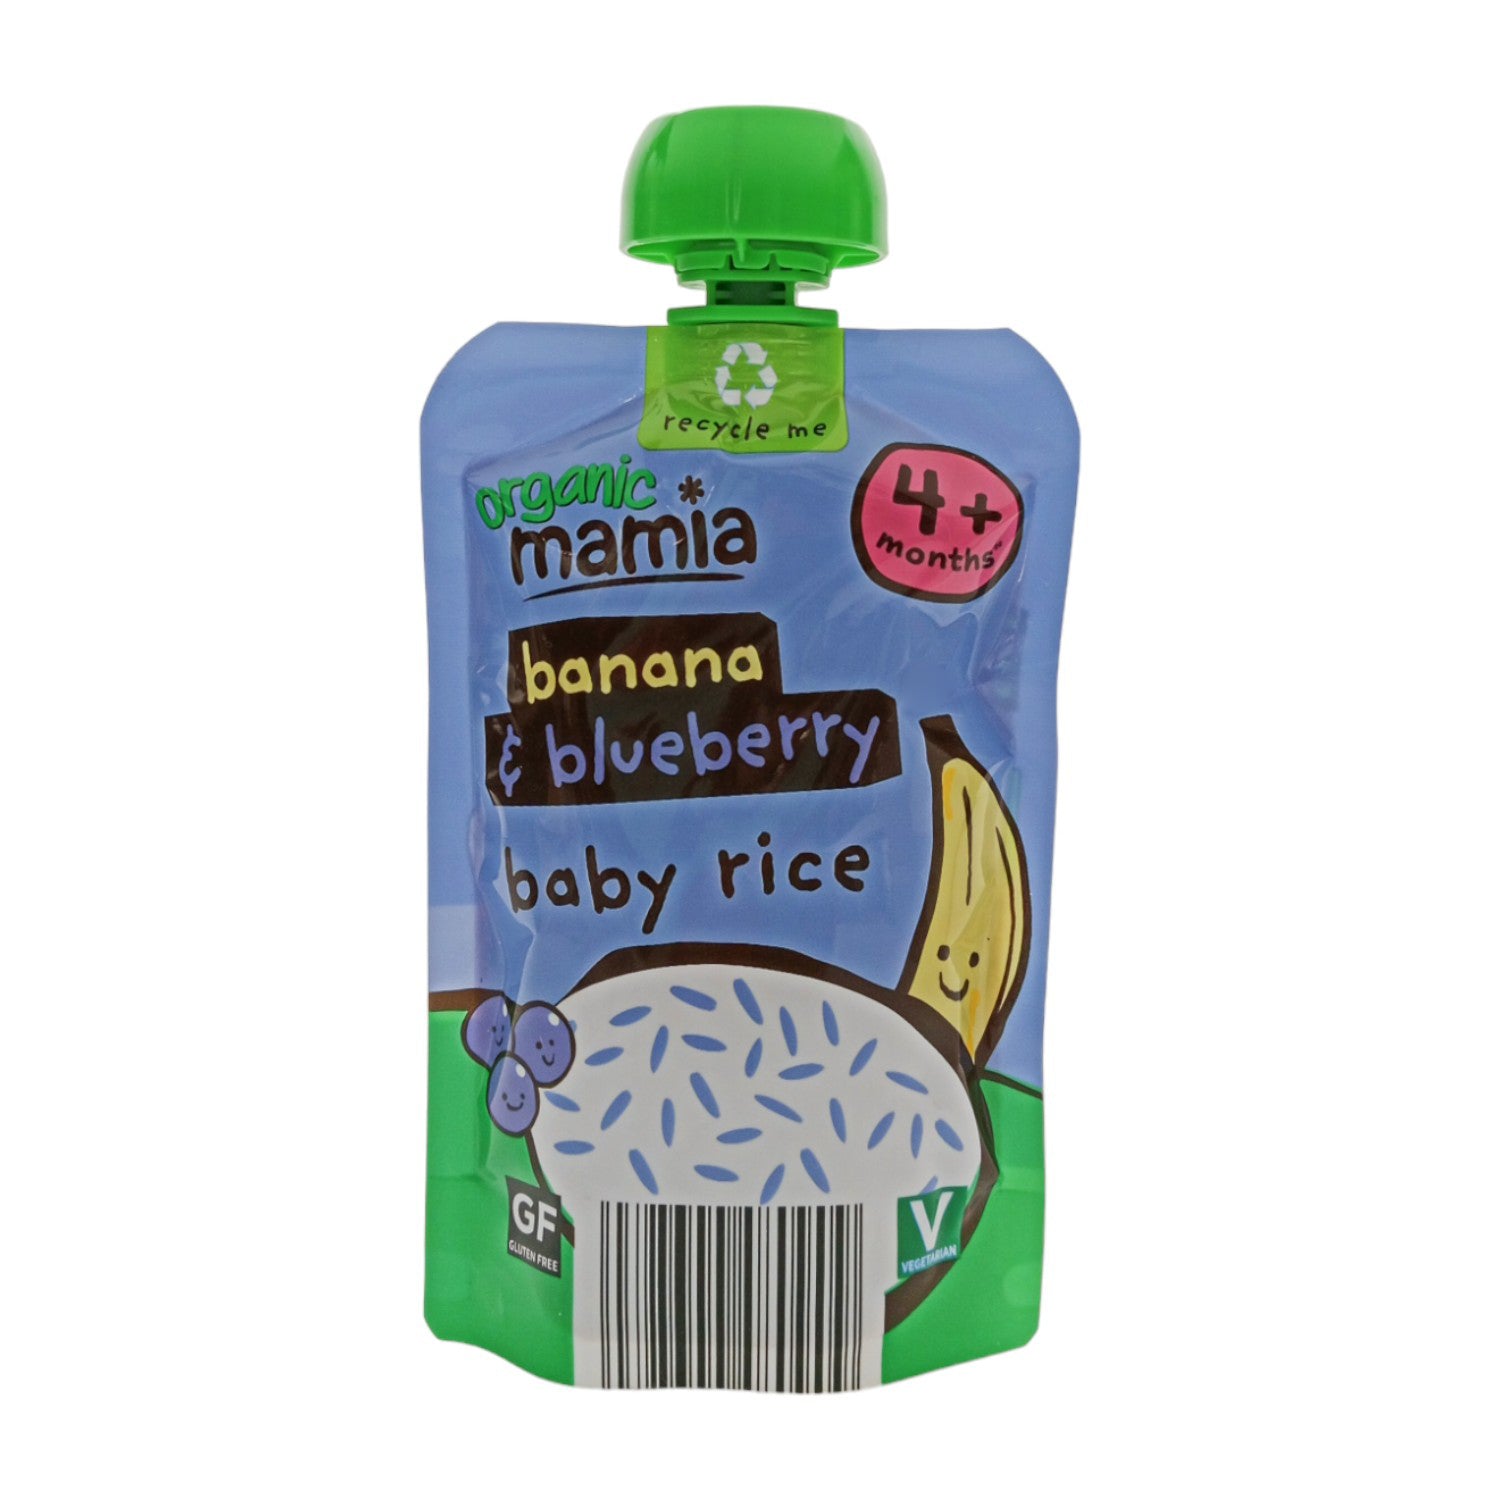 Organic Mamia Bananas & Blueberry baby Rice (4m+)